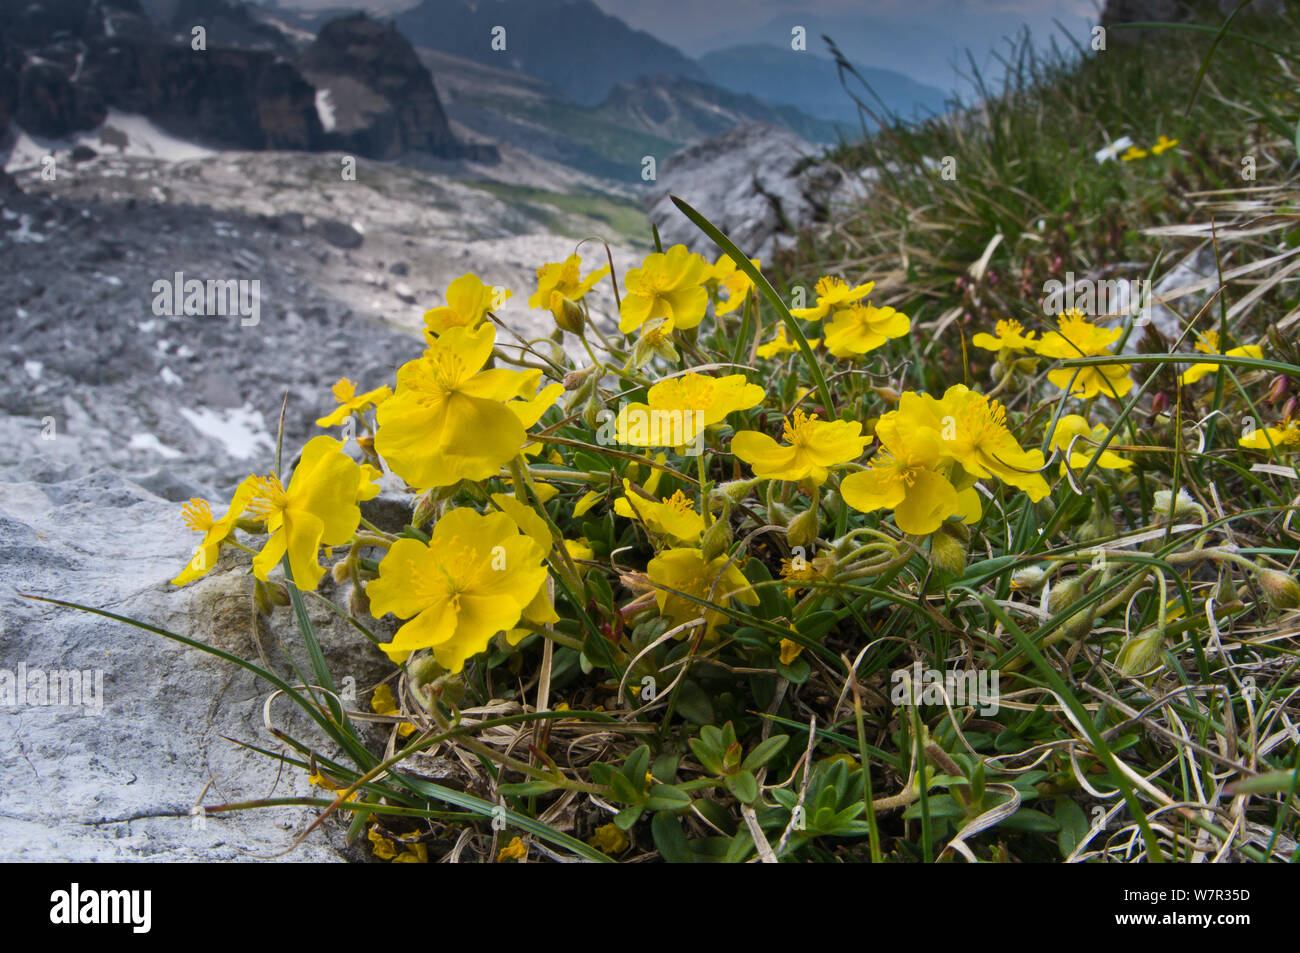 Common rockrose (Helianthemum nummularium) in flower, Monte Spinale, alpine zone, Madonna di Campiglio, Brenta Dolomites, Italy, July Stock Photo